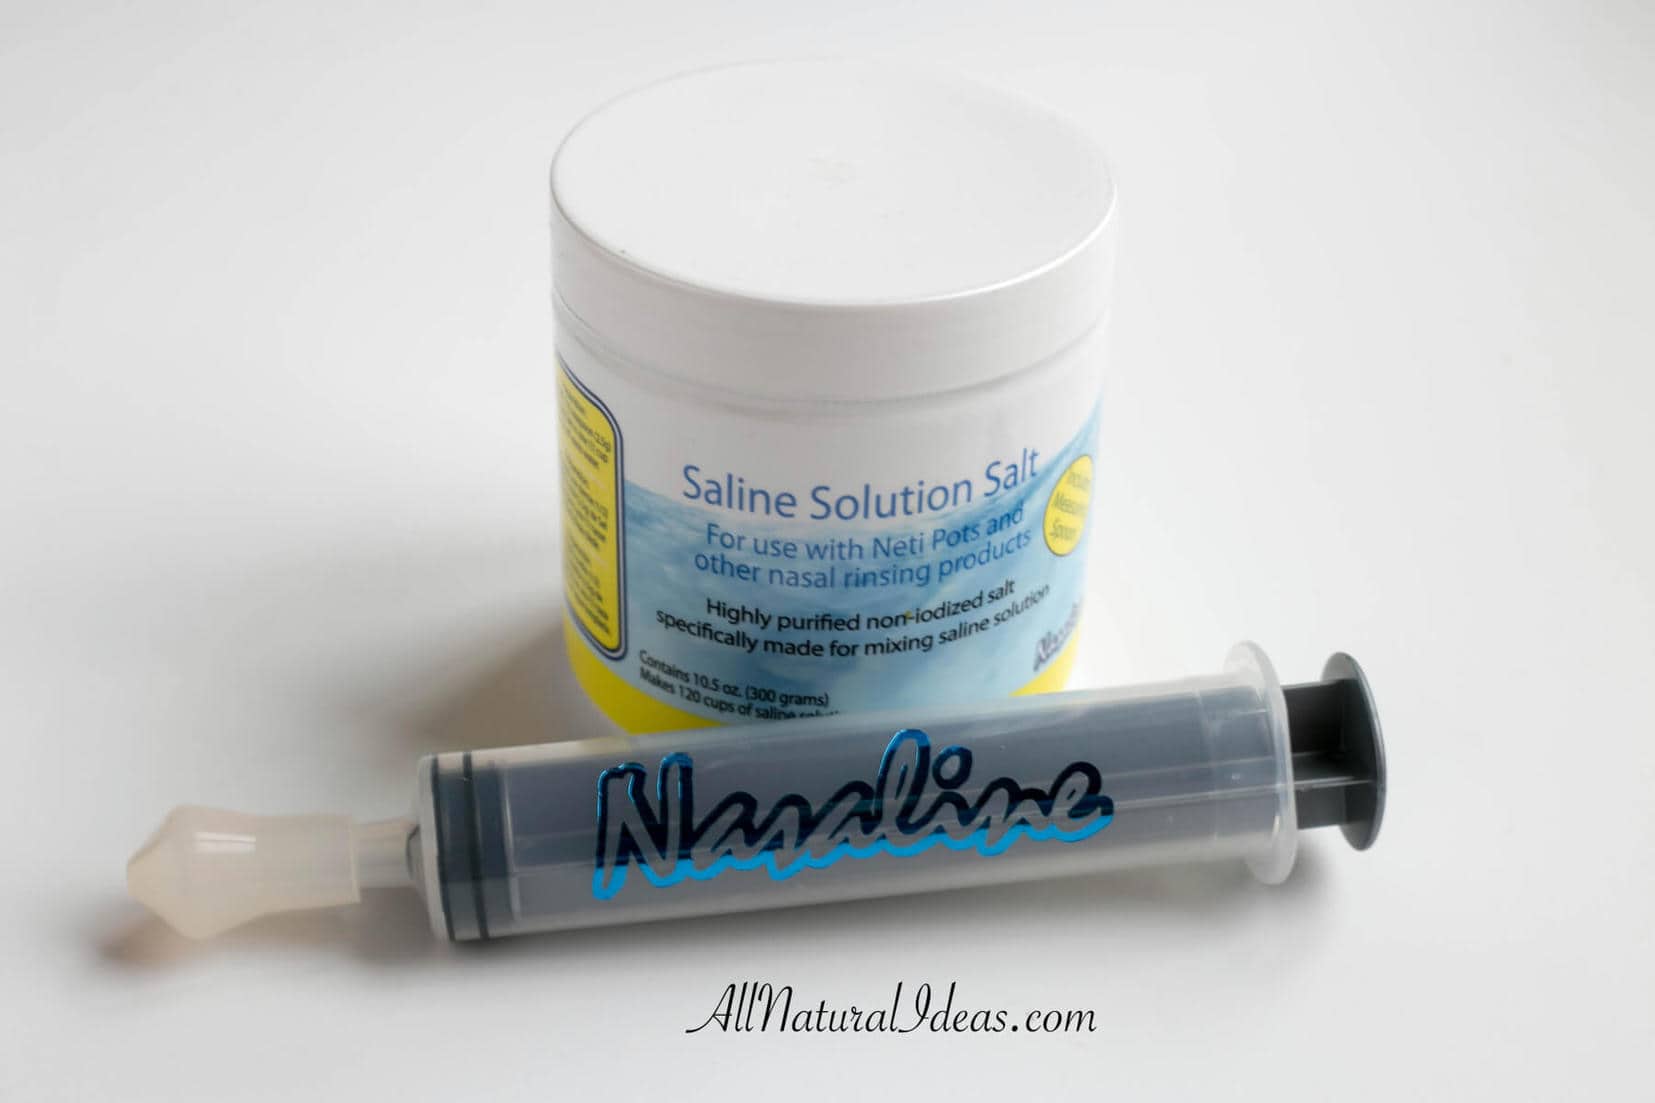 Saline nasal flush for natural sinus relief